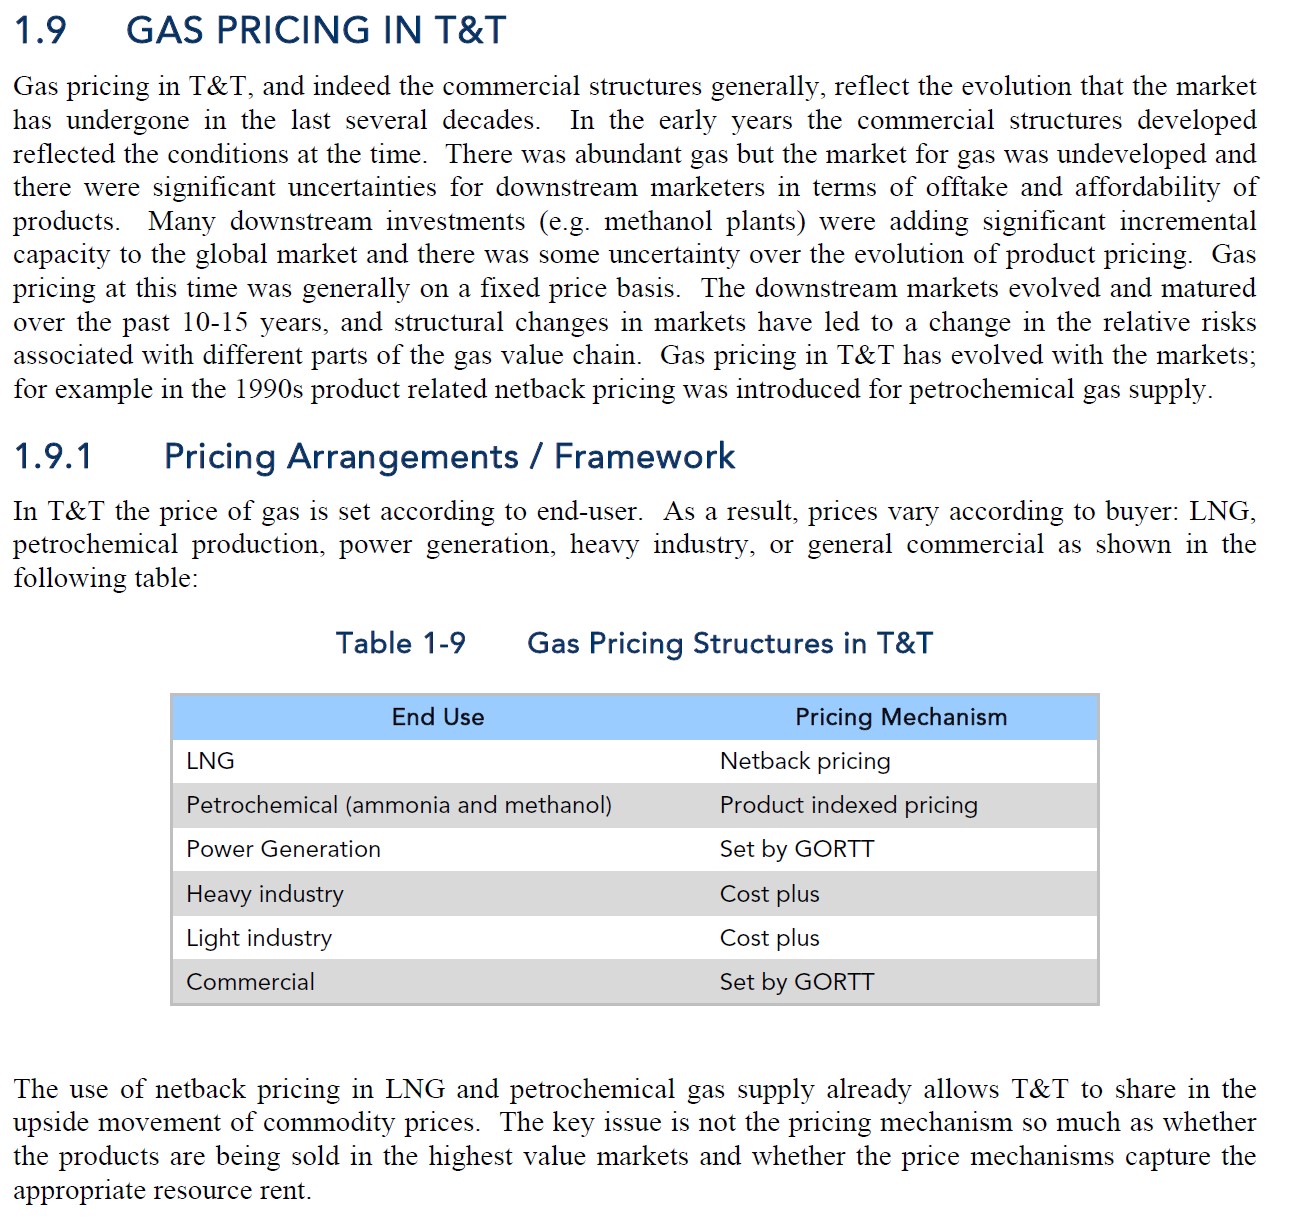 trinidadgaspricing.jpg